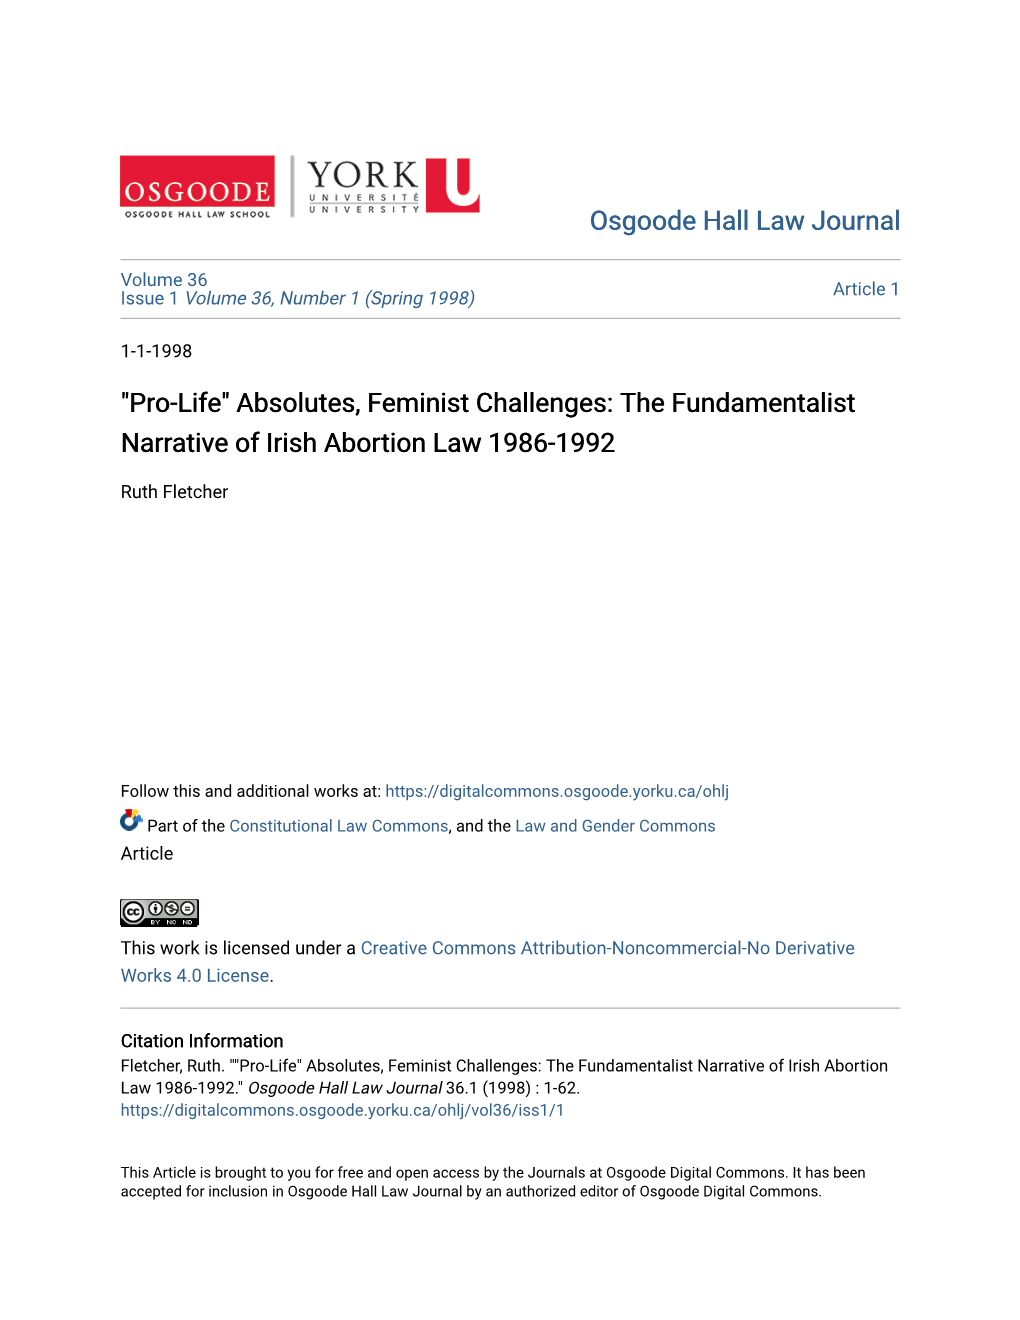 The Fundamentalist Narrative of Irish Abortion Law 1986-1992